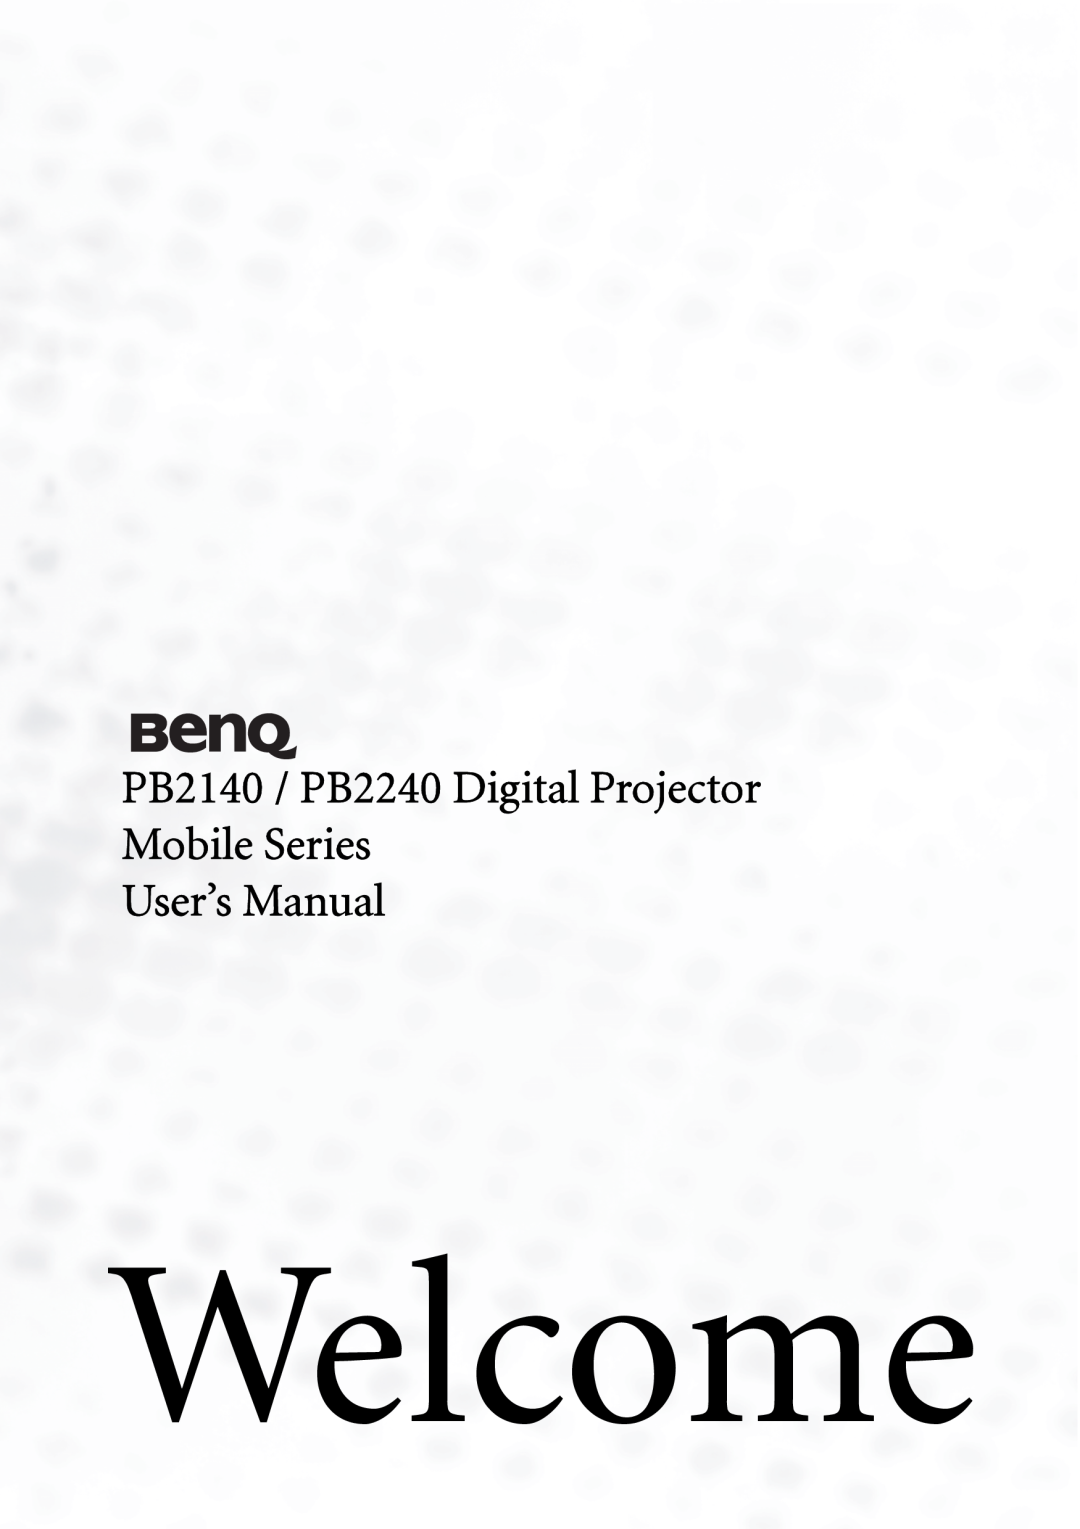 BenQ user manual Welcome, PB2140 / PB2240 Digital Projector Mobile Series User’s Manual 